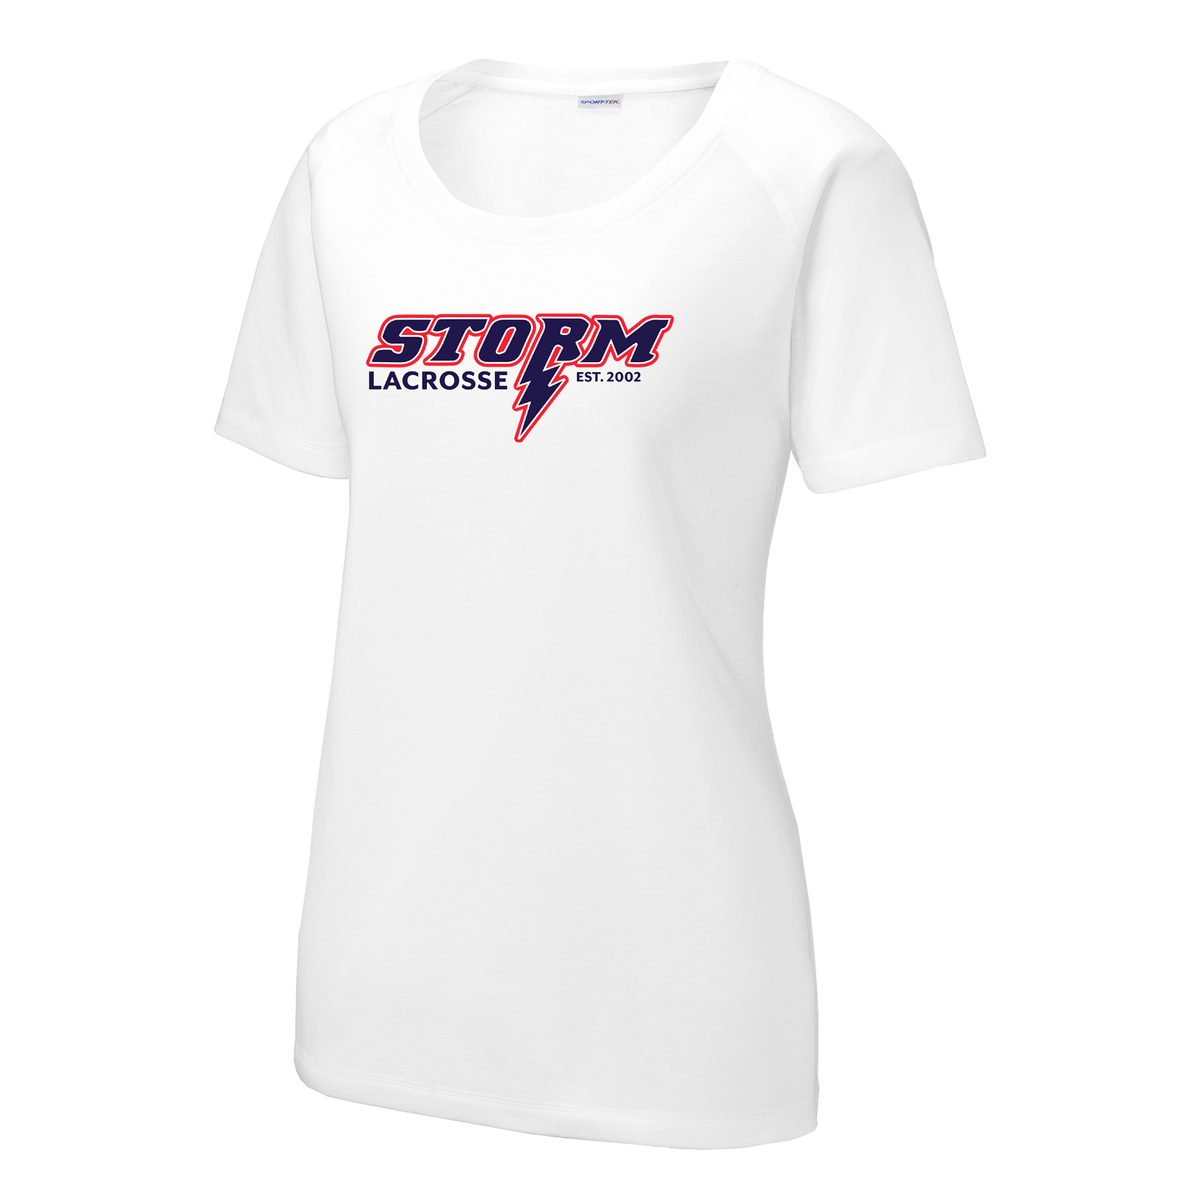 Storm Lacrosse  Women's Raglan CottonTouch